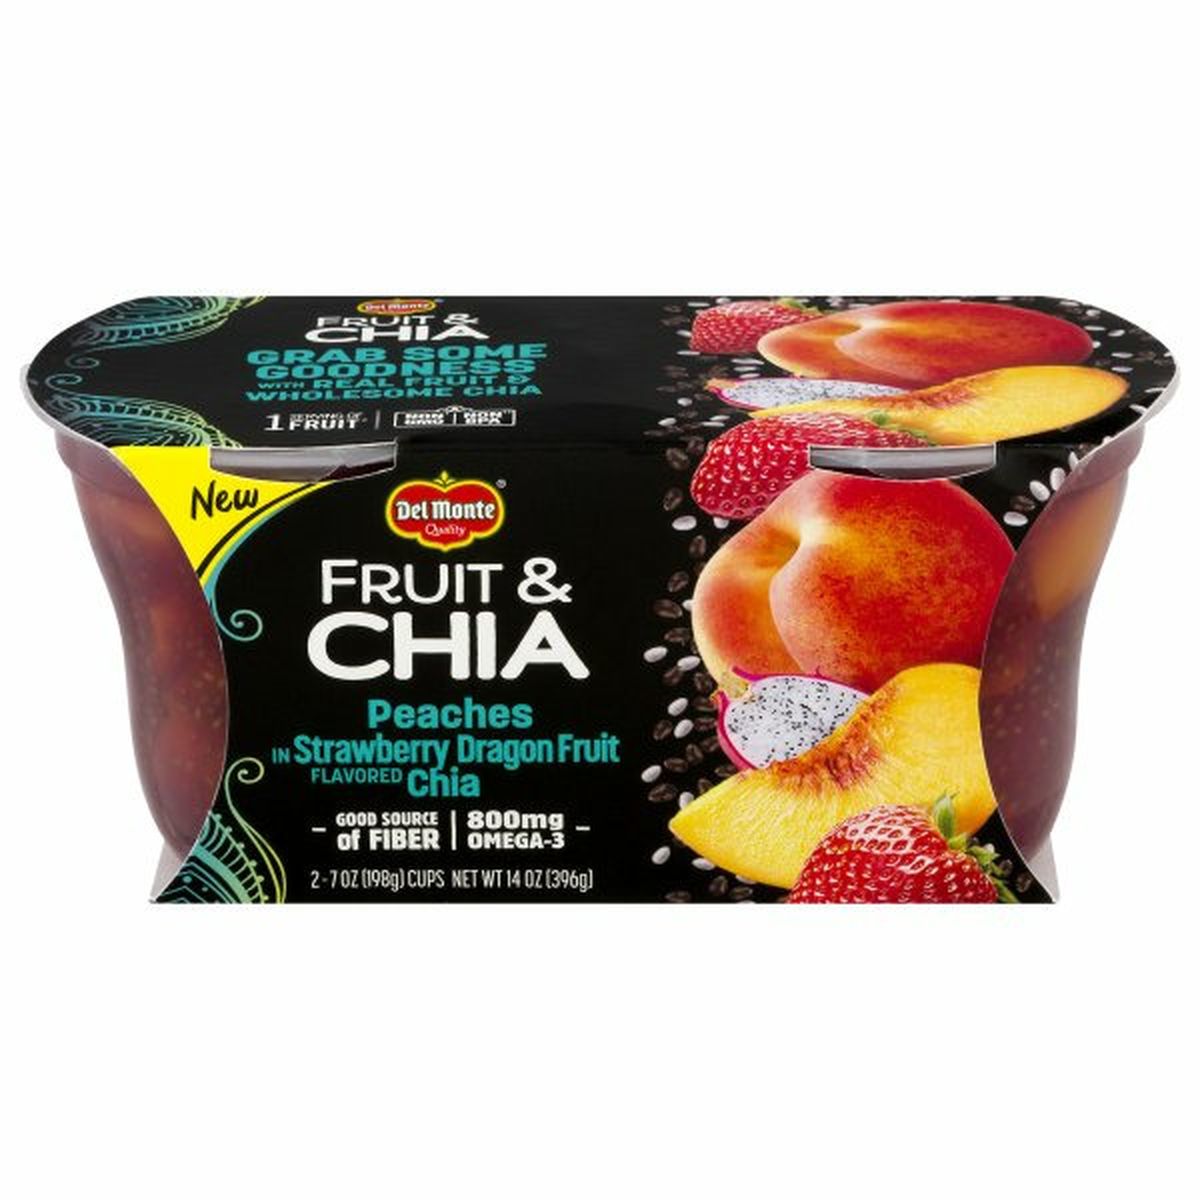 Calories in Del Monte Fruit & Chia, Peaches in Strawberry Dragon Fruit Flavored Chia